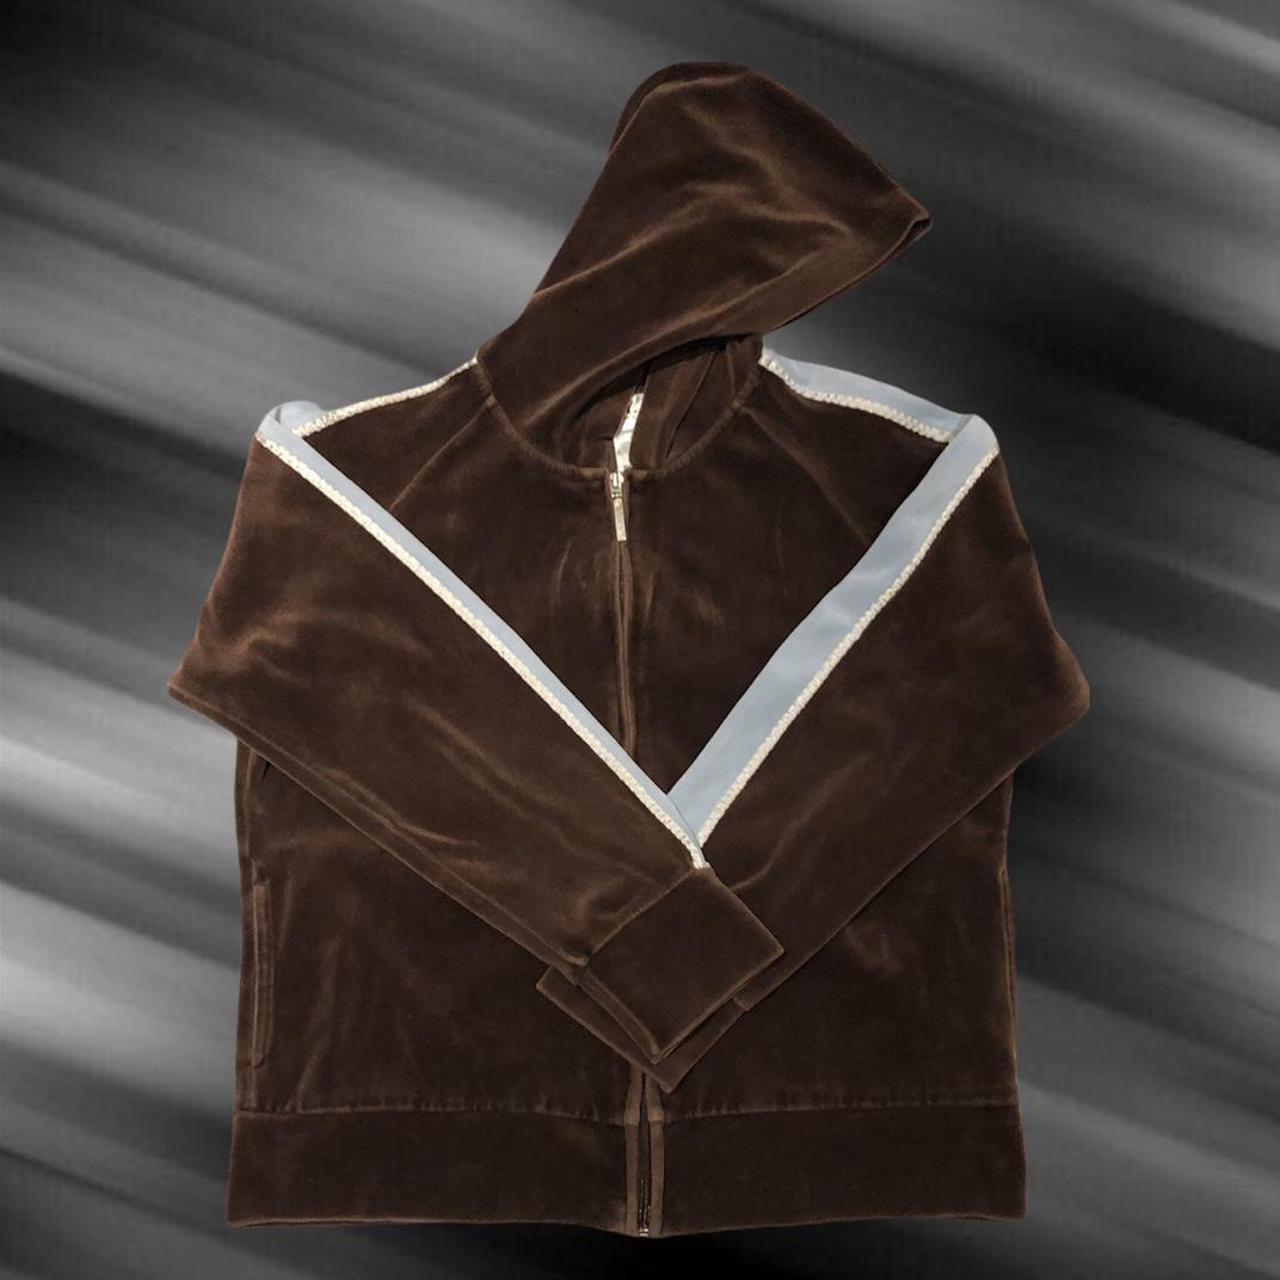 Product Image 1 - Brown velveteen jacket 
/)/) (\(\
(